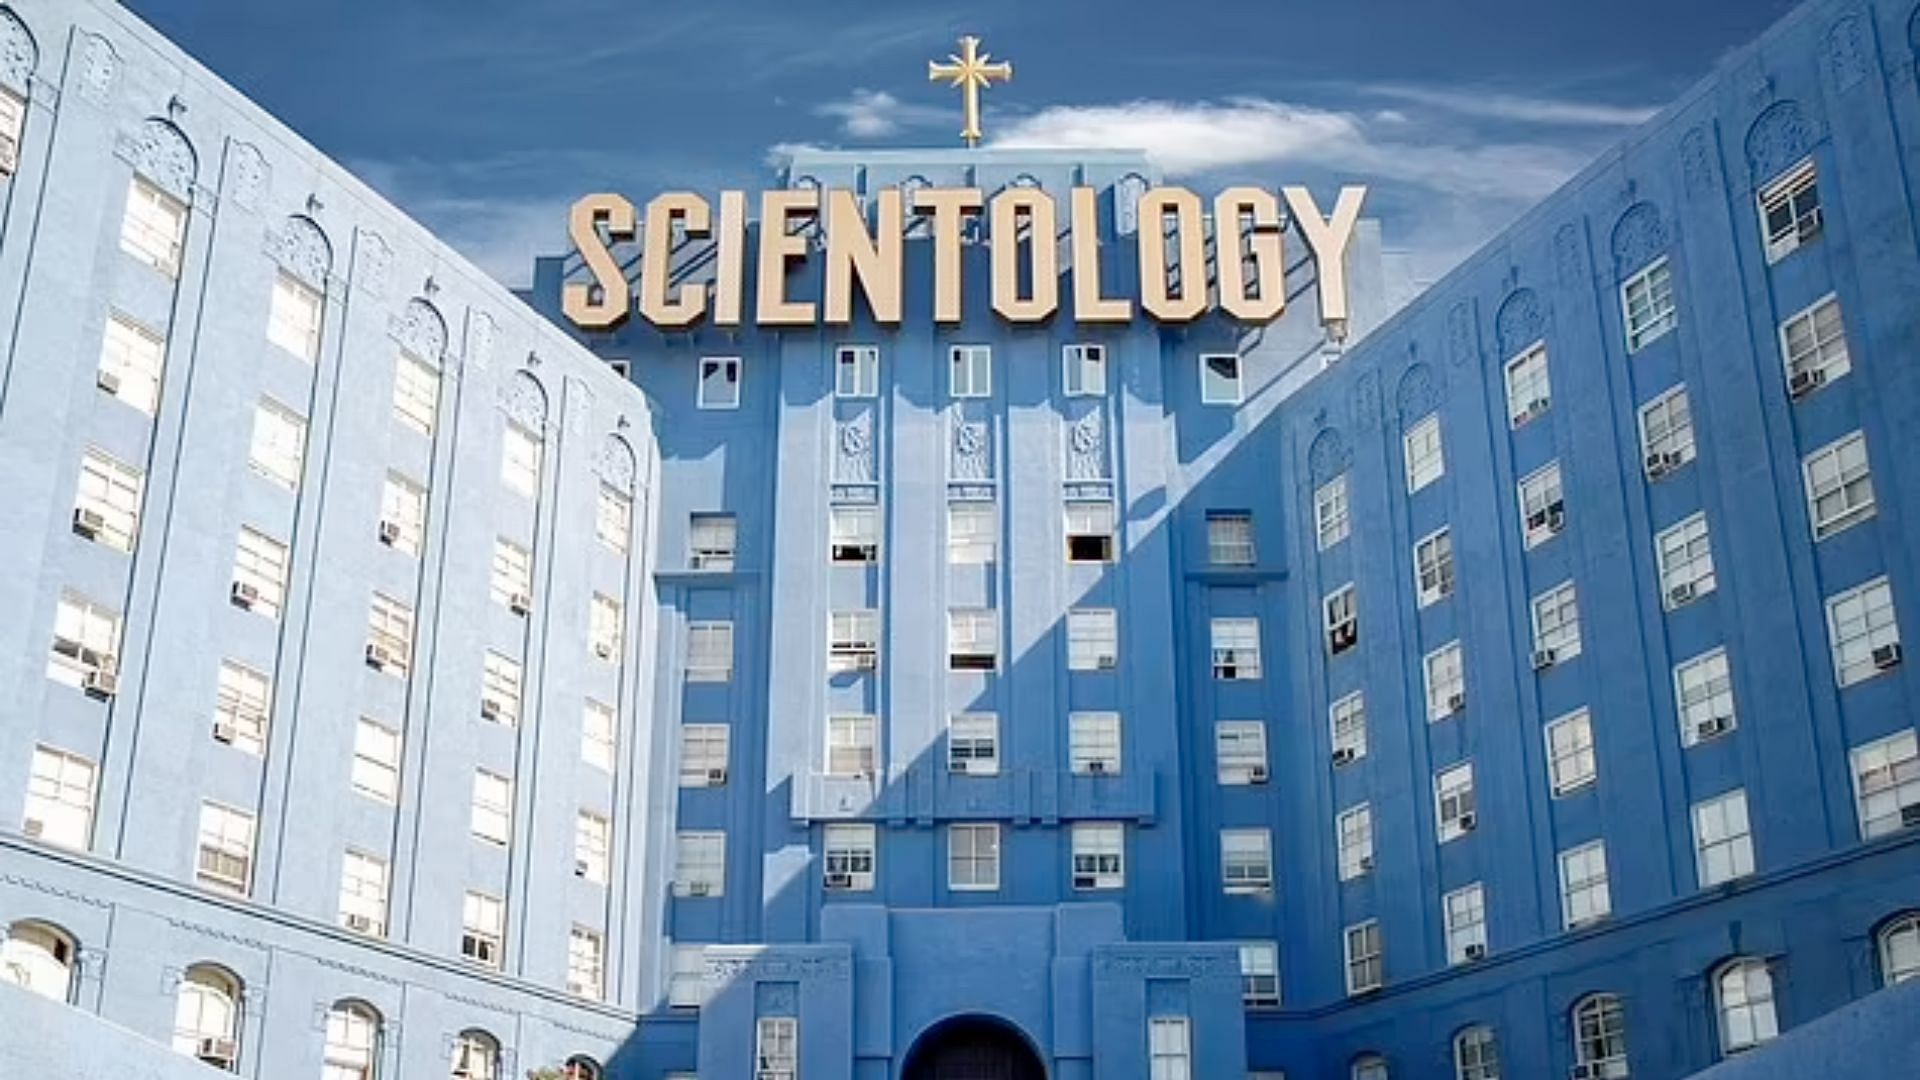 The Church of Scientology (Image via Getty/Martina Badini)